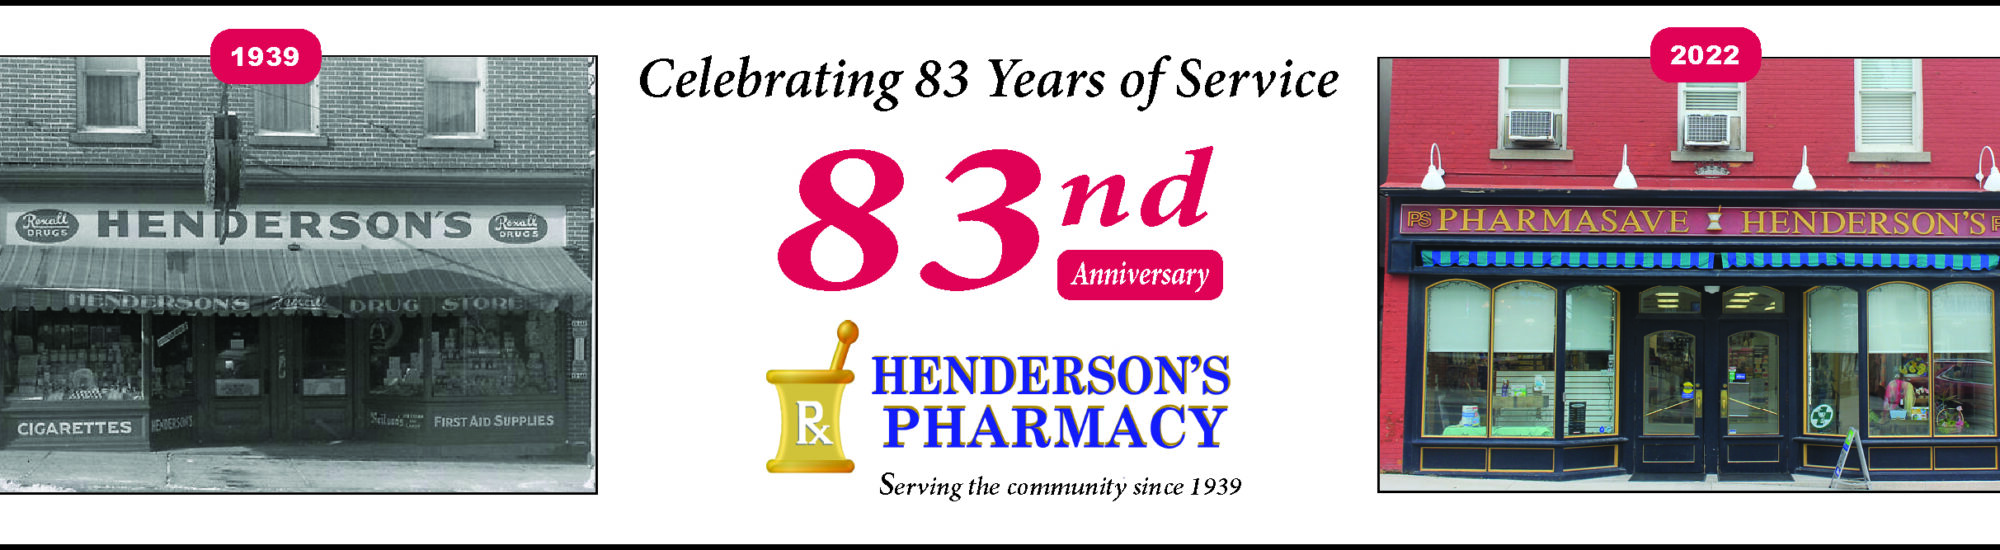 Henderson's Pharmacy 83rd Anniversary